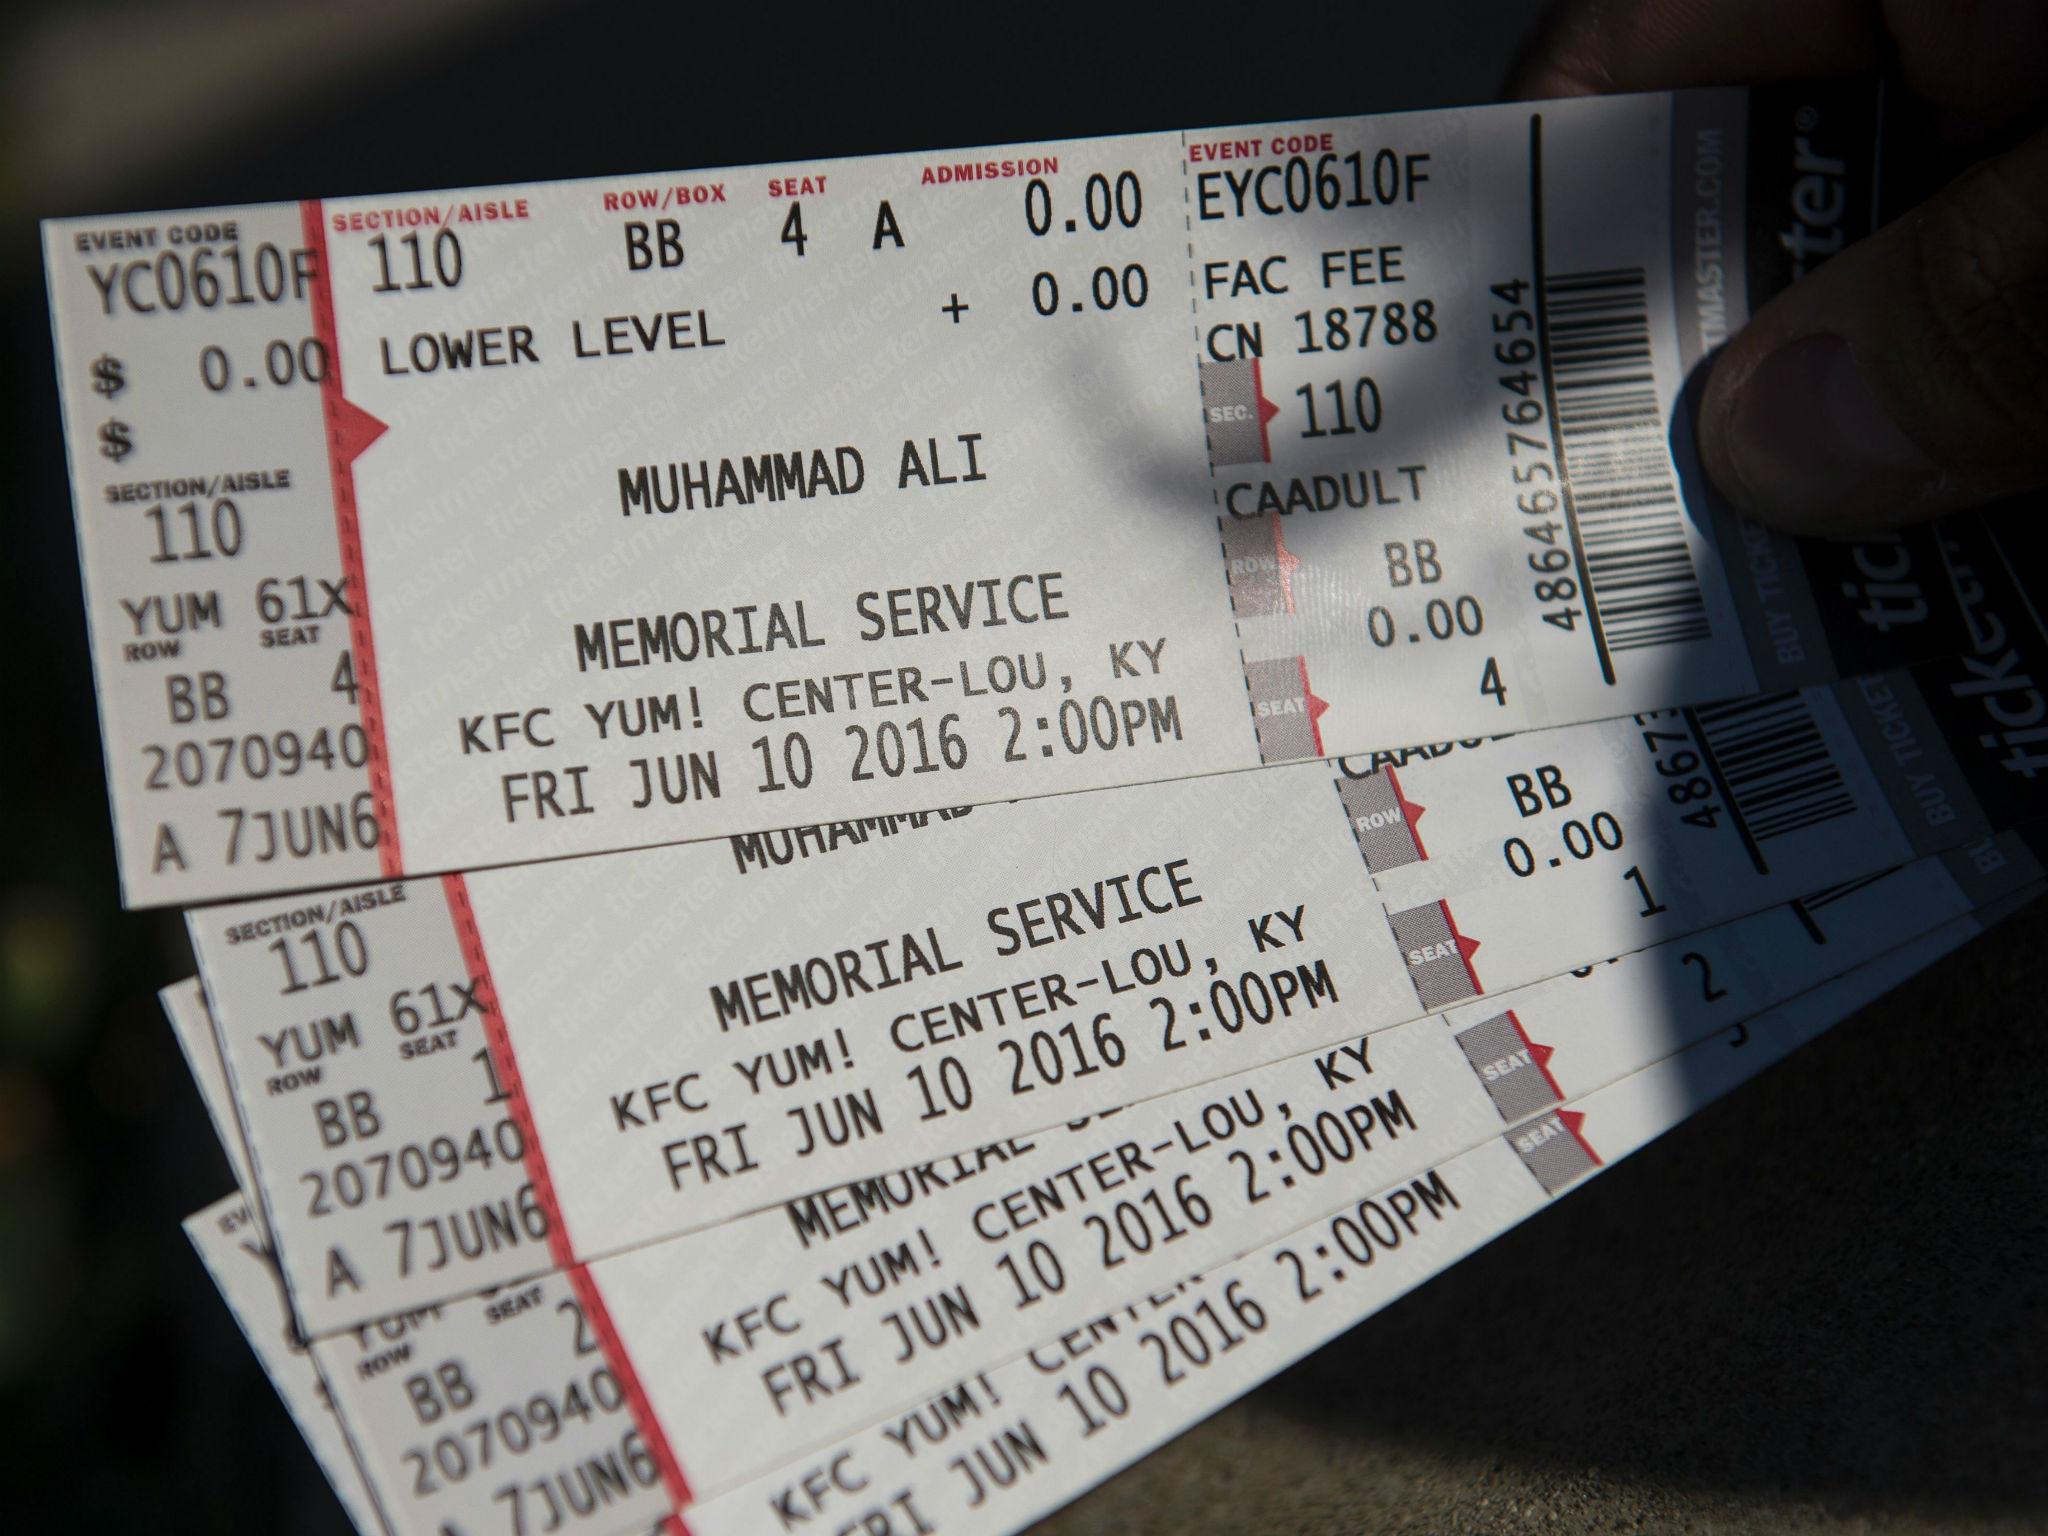 Tickets for Muhammad Ali's memorial service